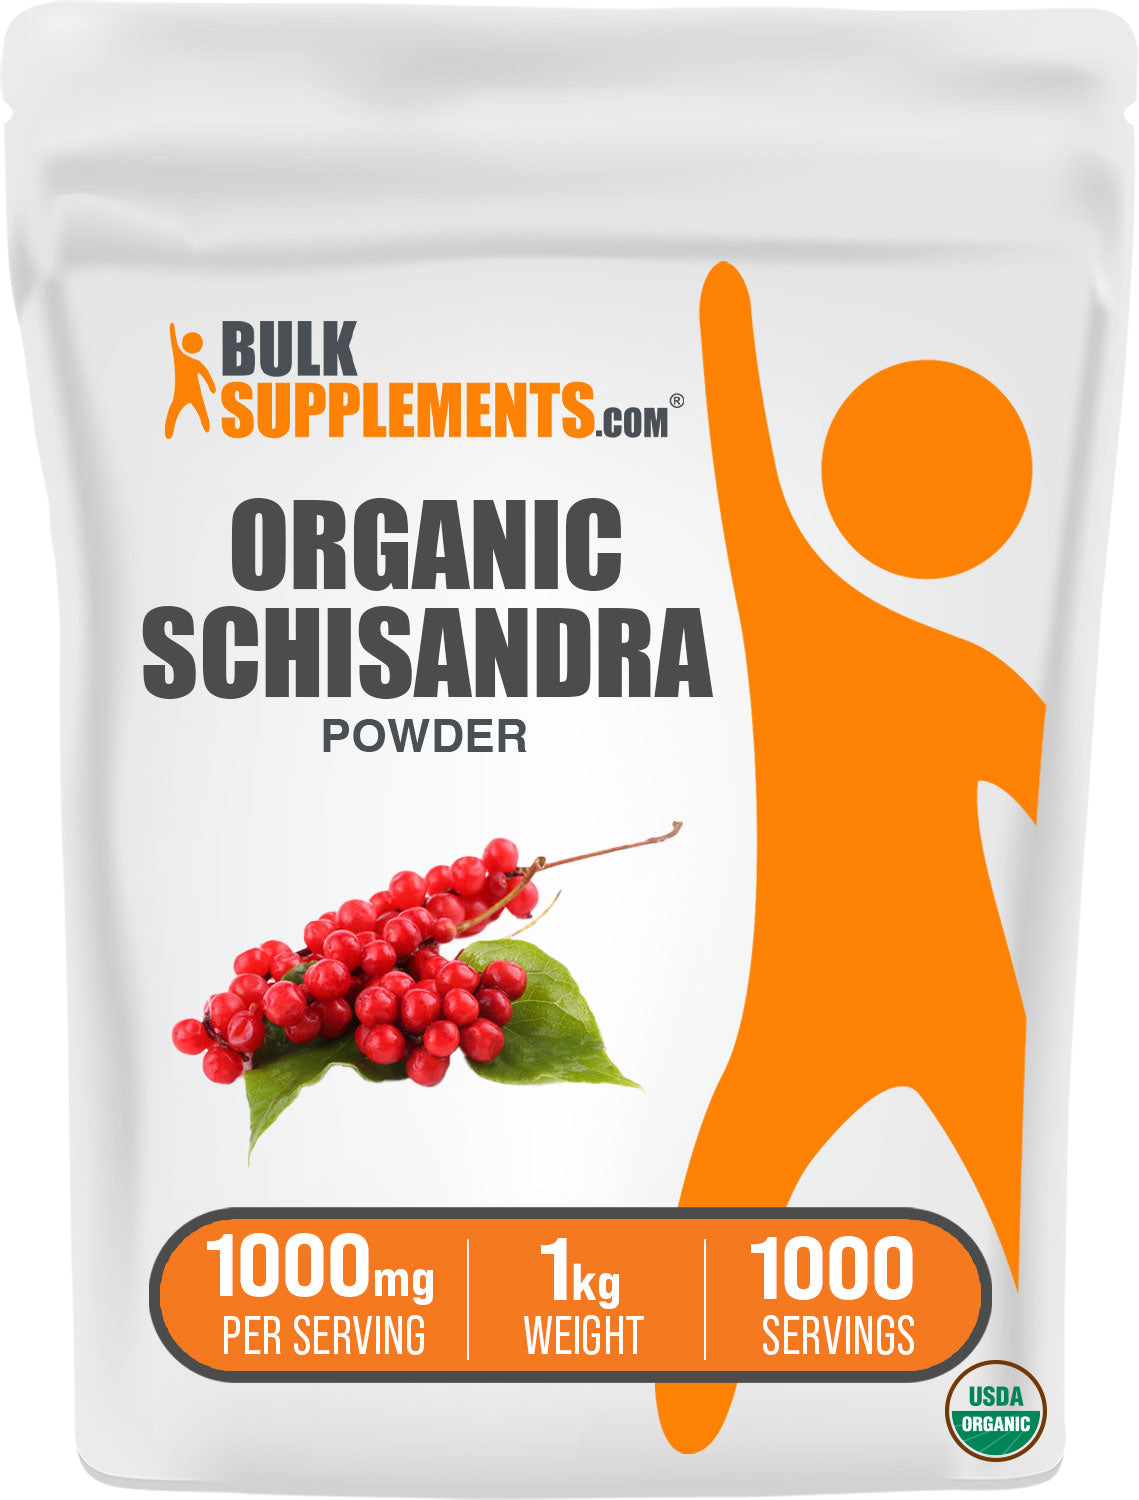 Organic Schisandra Powder Main Bag Label 1kg